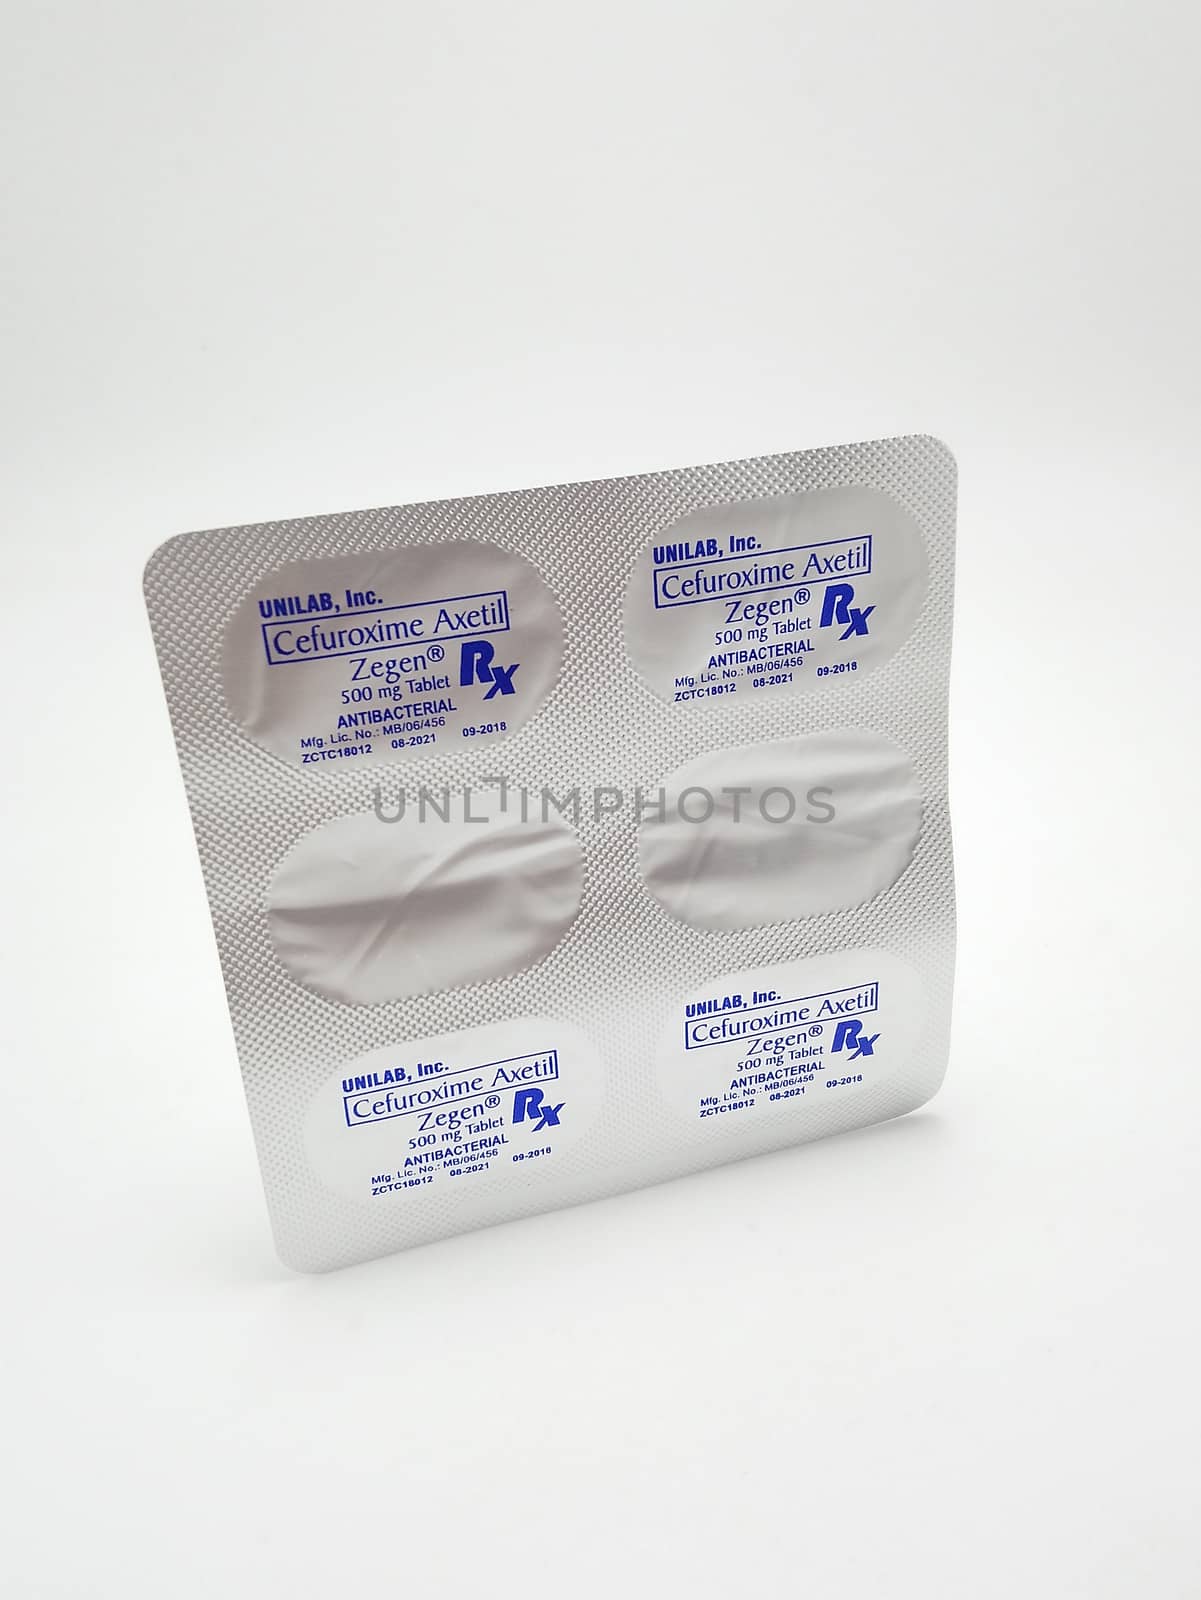 Cefuroxime axetil Zegen antibacterial tablet in Manila, Philippi by imwaltersy